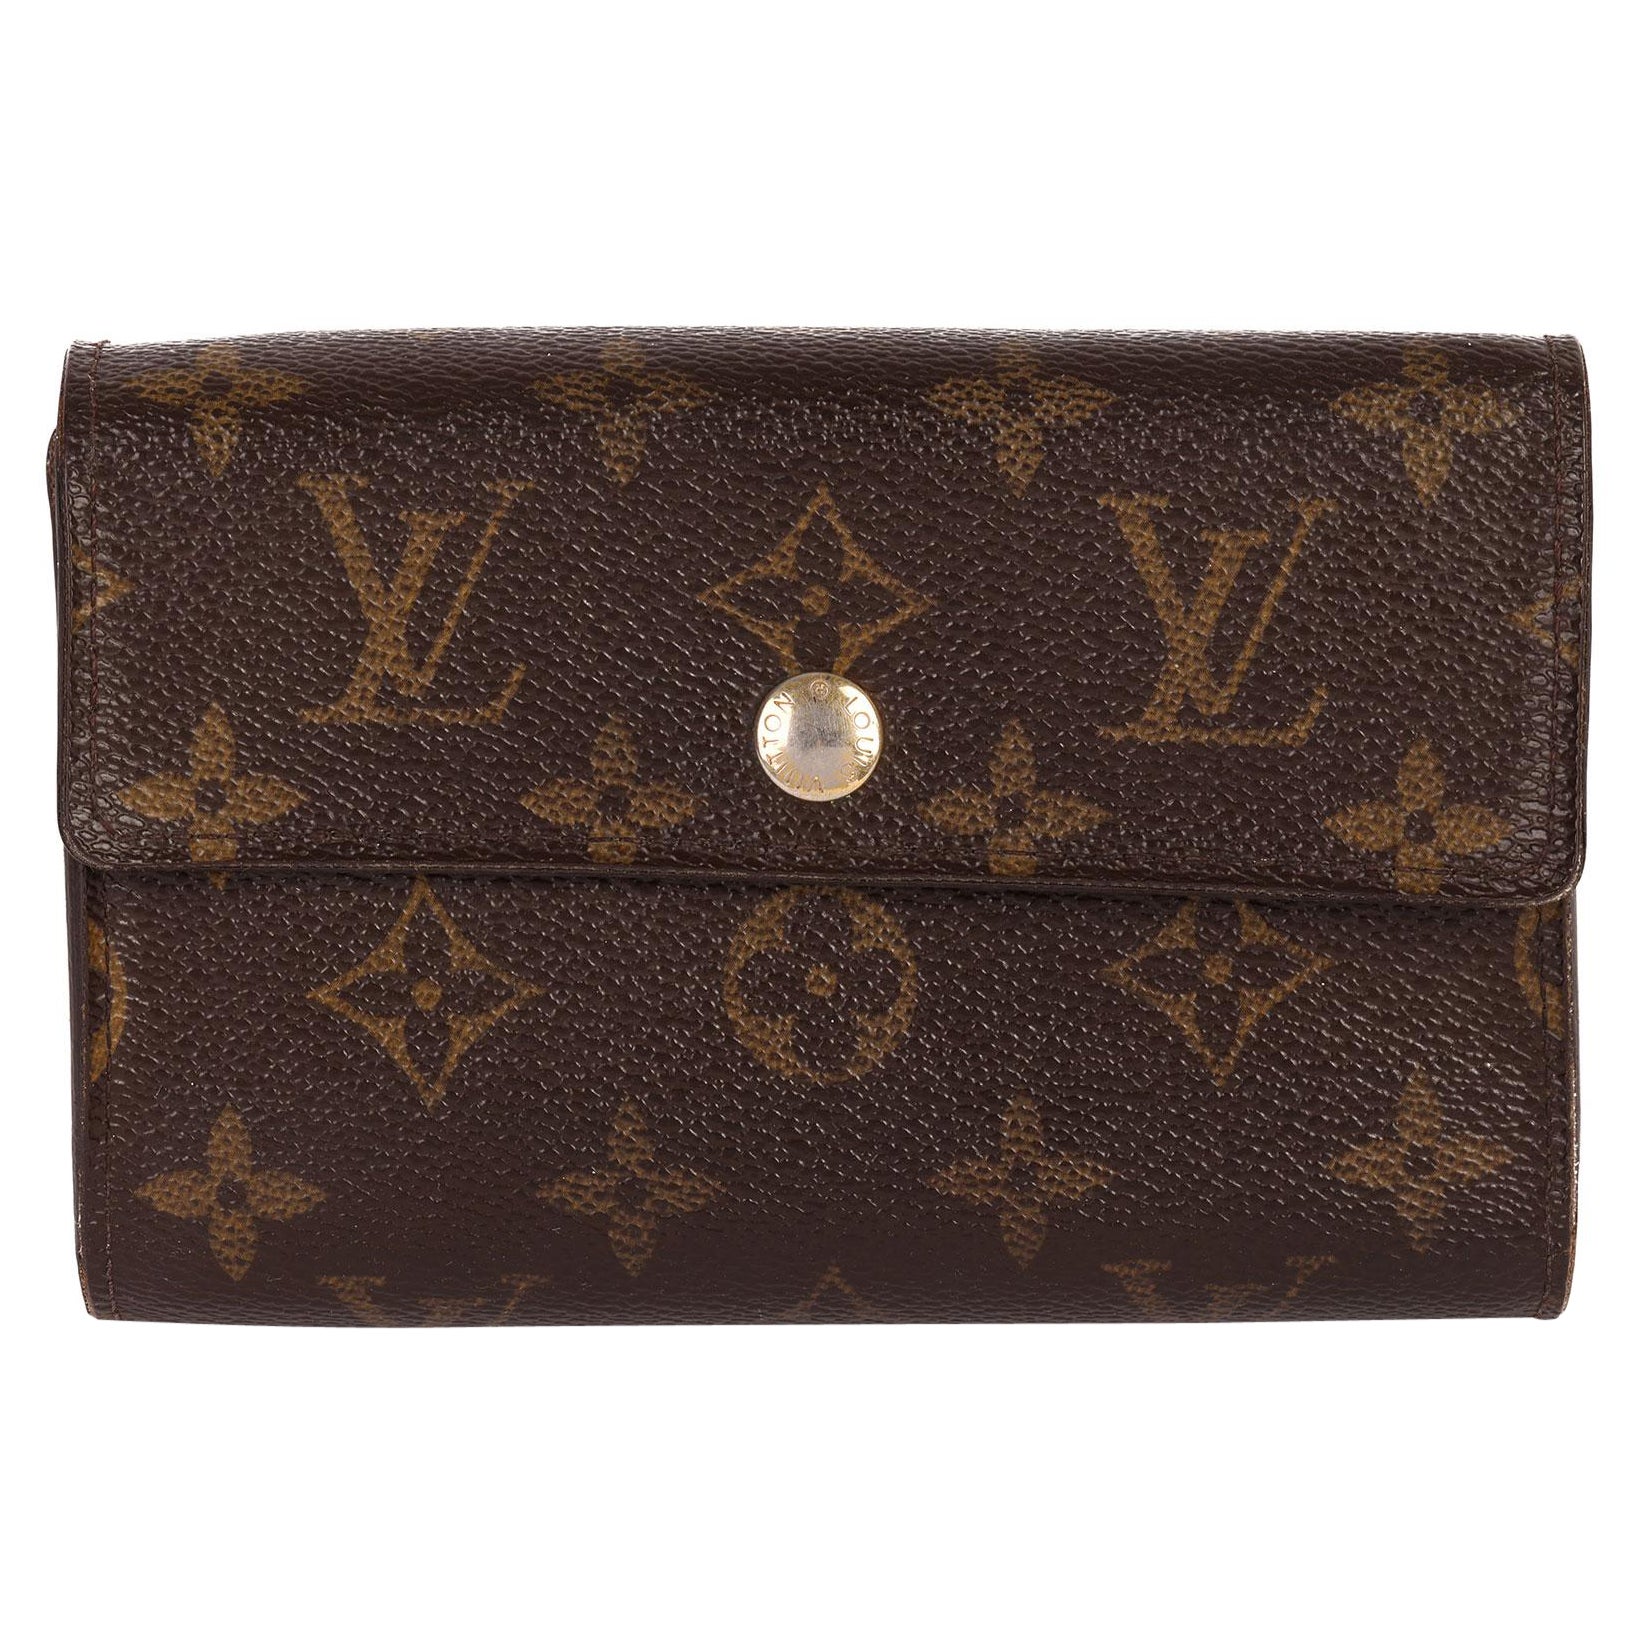 PRELOVED Louis Vuitton Amarante Vernis Monogram Sarah Compact Noir